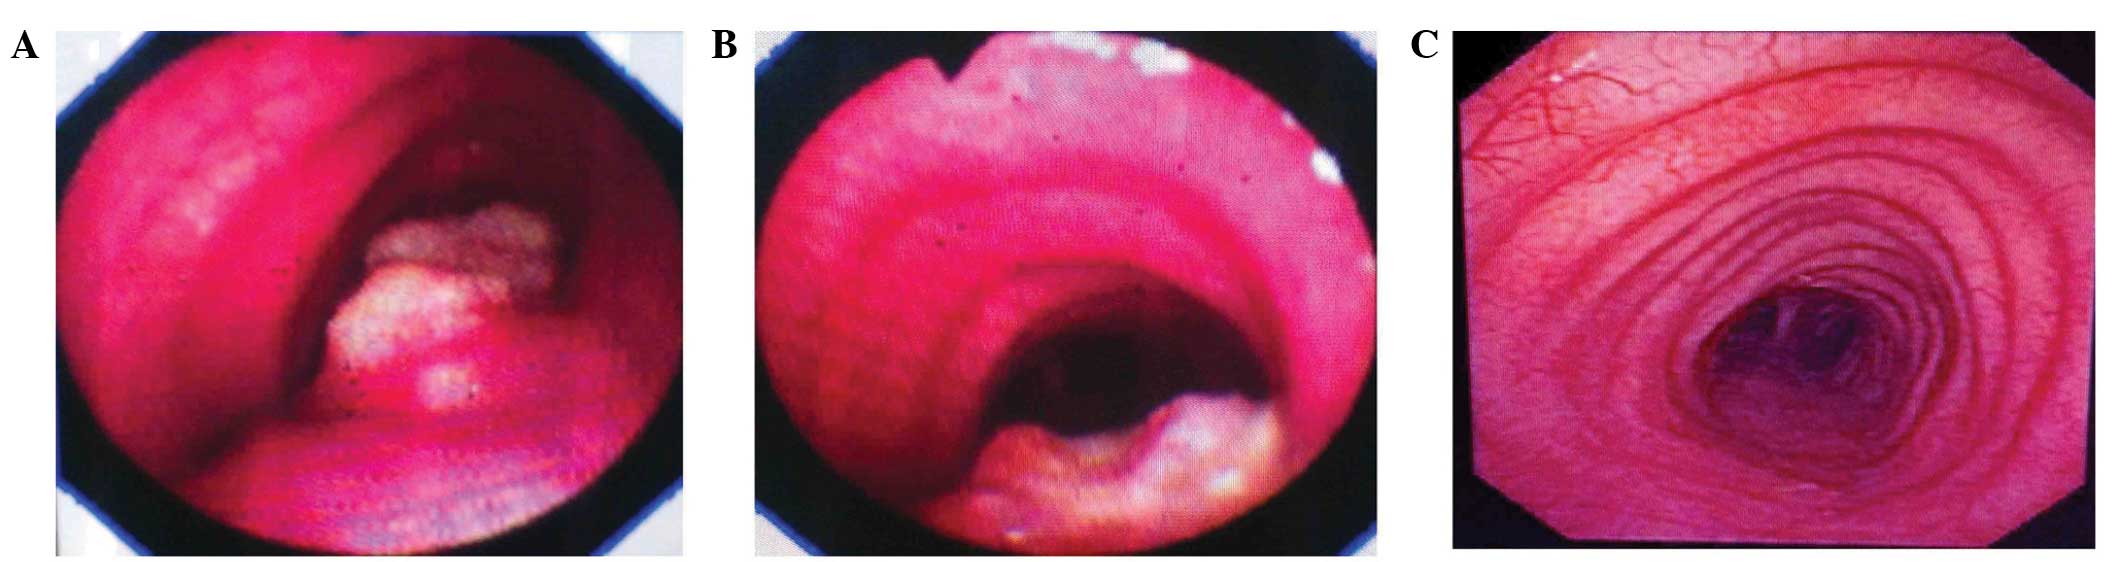 Squamous papilloma of larynx